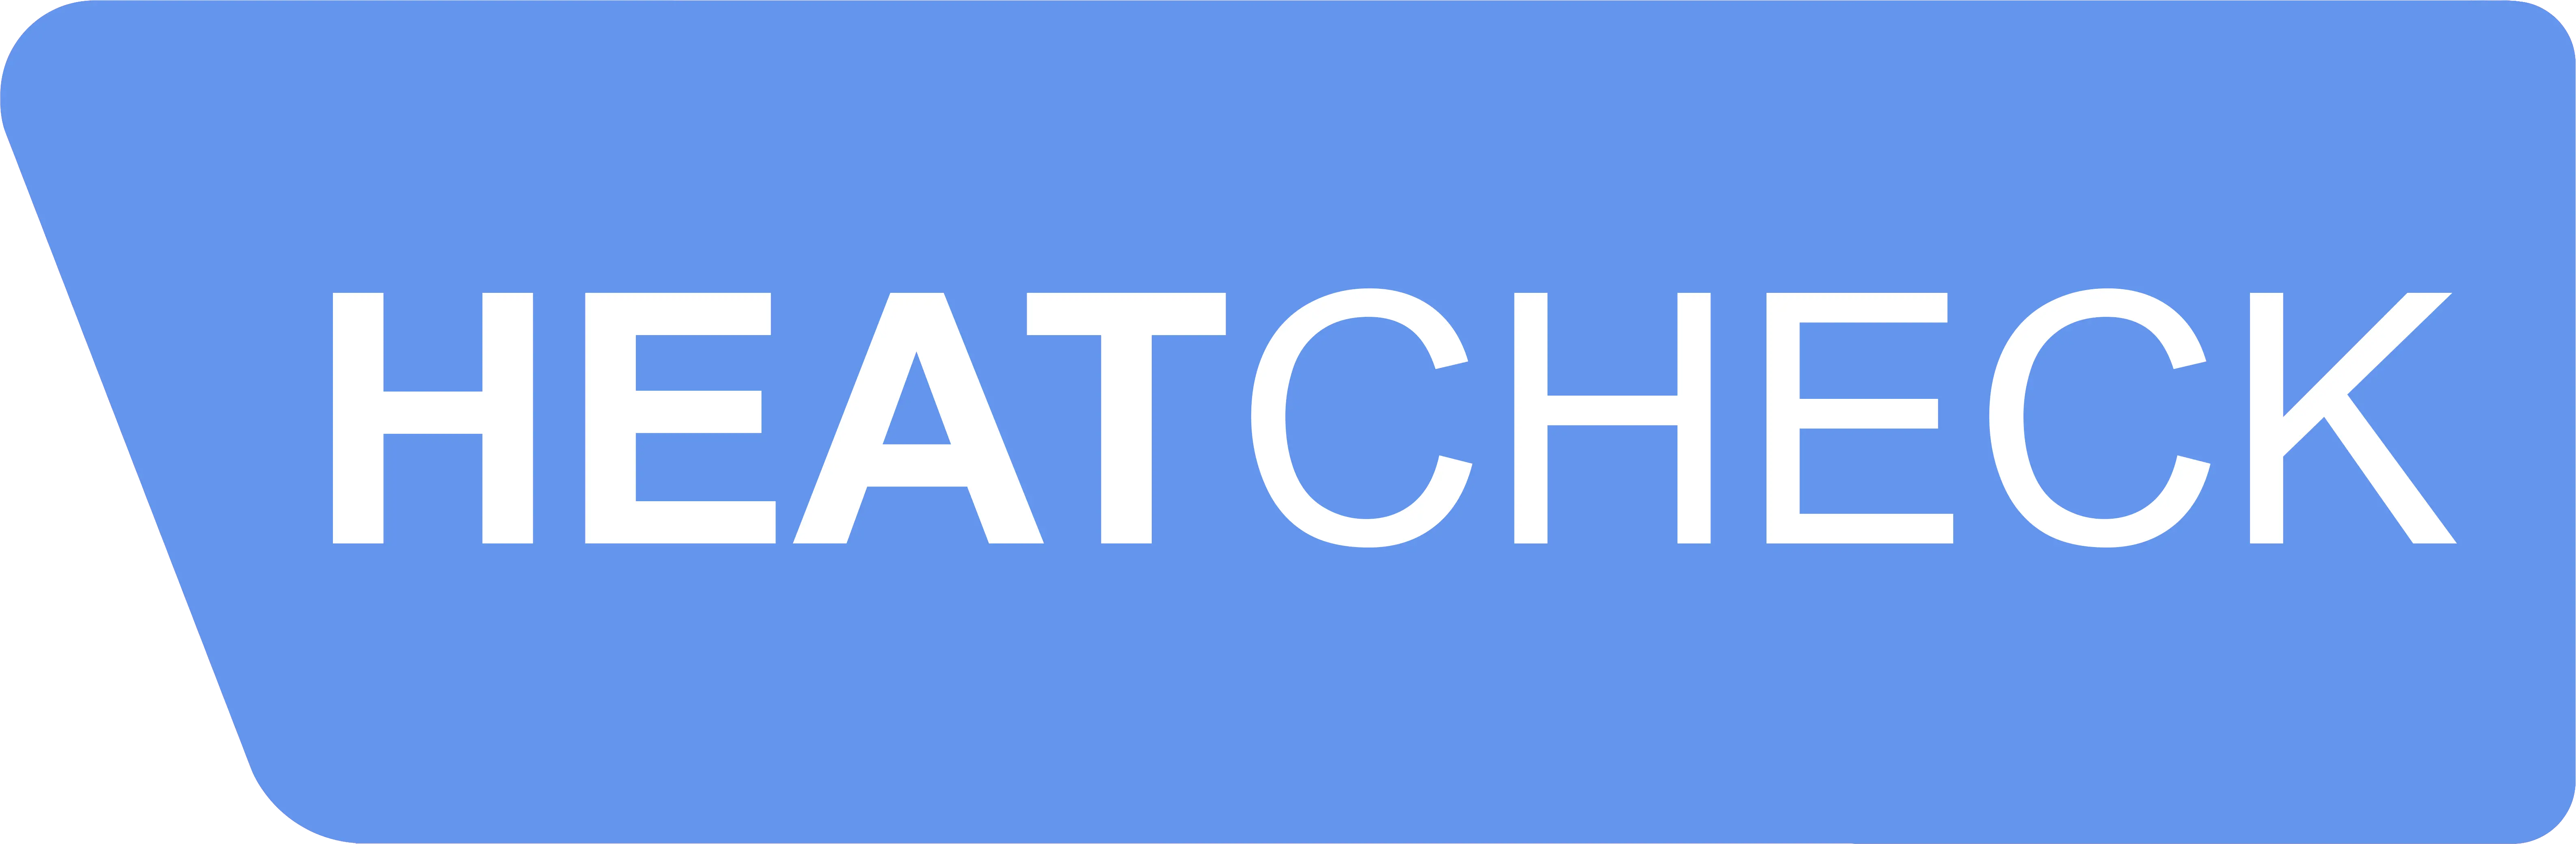 Heatcheck logo